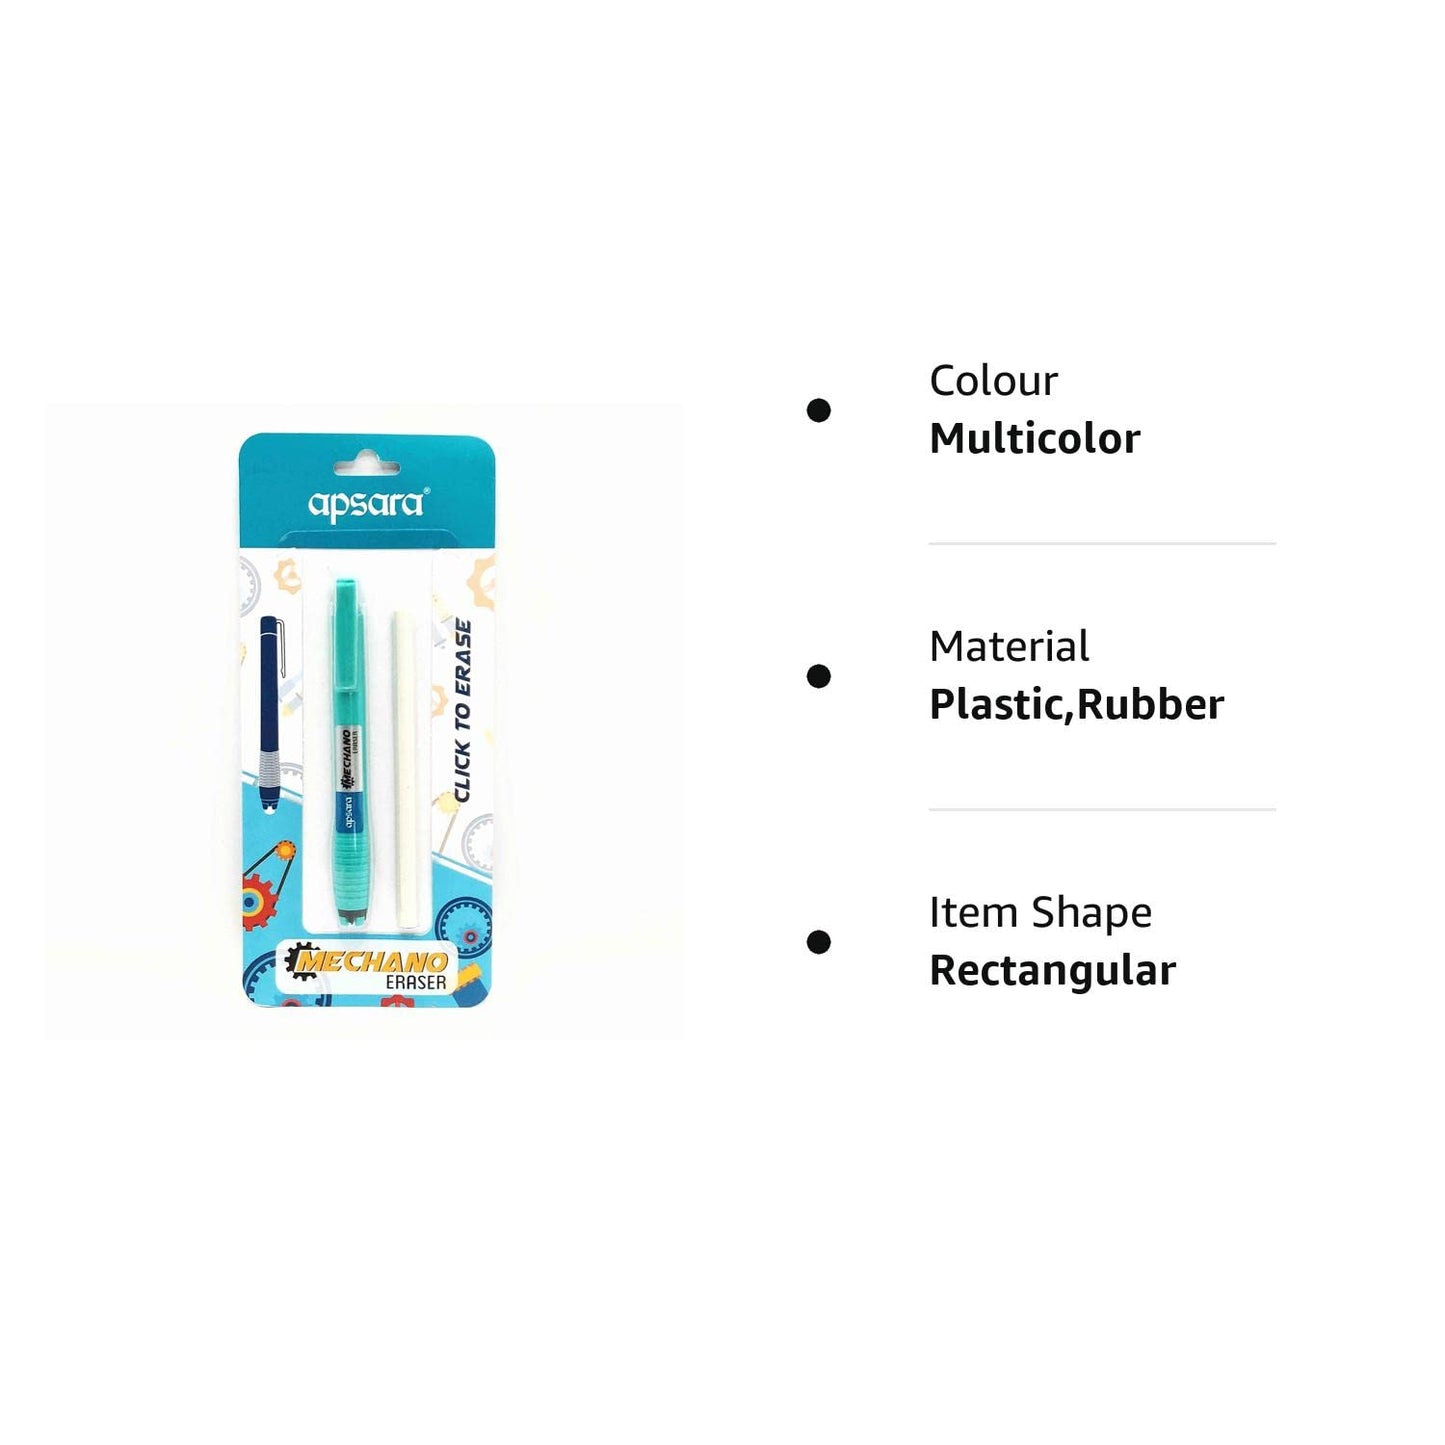 Apsara Mechano Eraser,Click Mechanism Eraser,Comfortable Grip Handle,Clean Eraser with Plastic Container,Students & Artist,Pack of 5